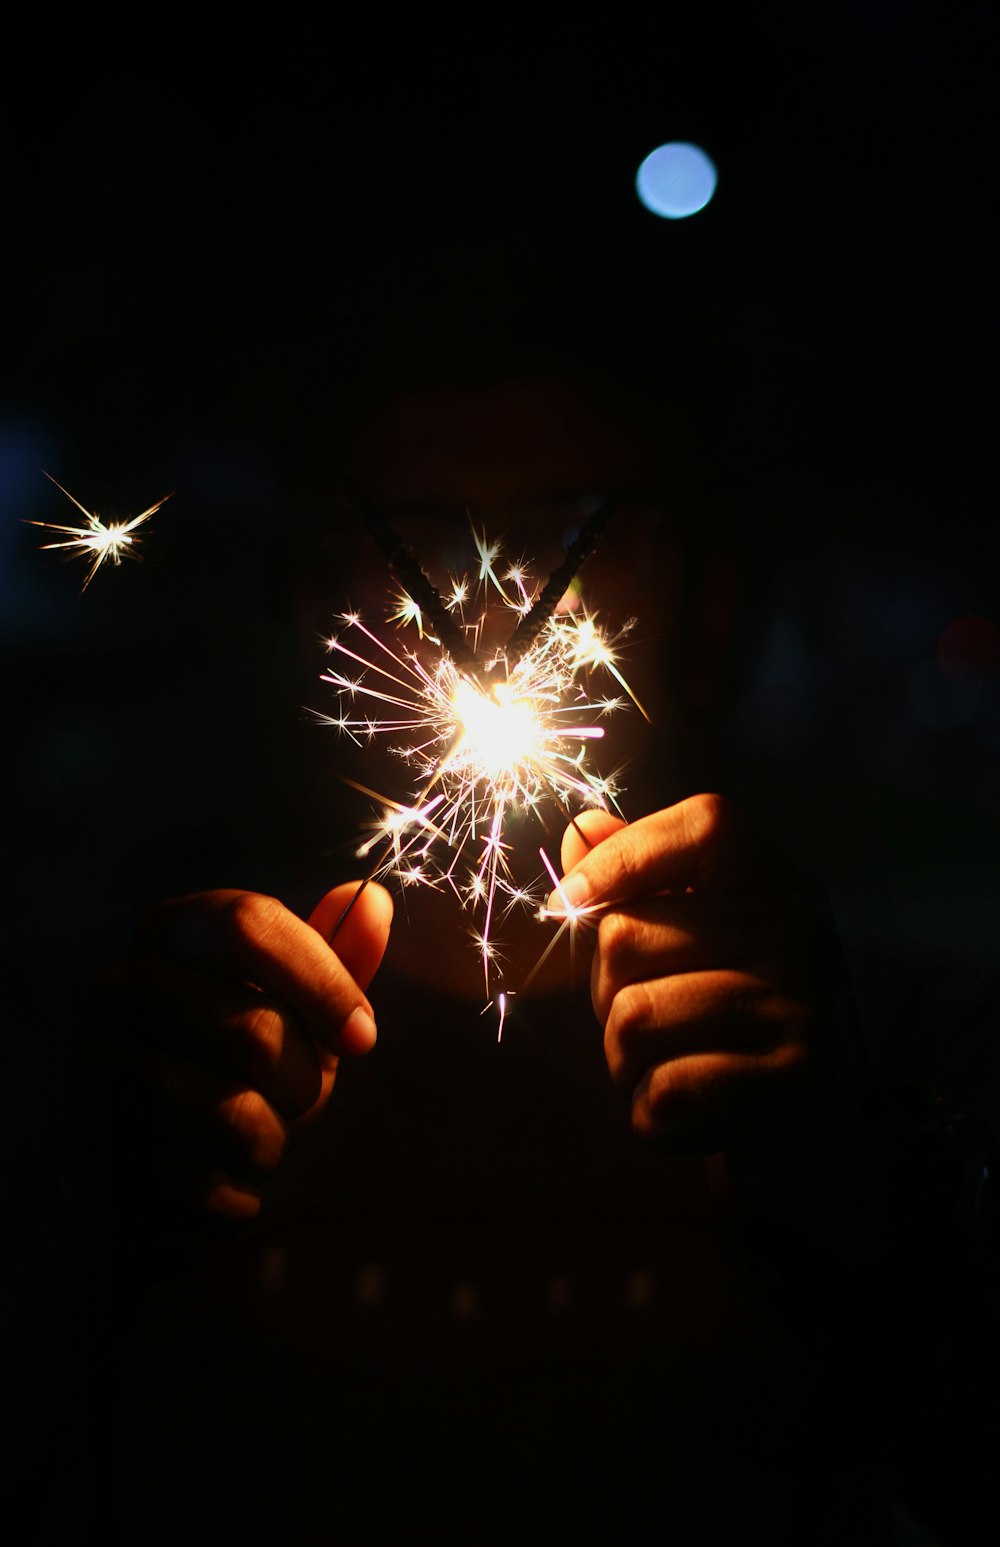 person holding lighted sparkler in dark room